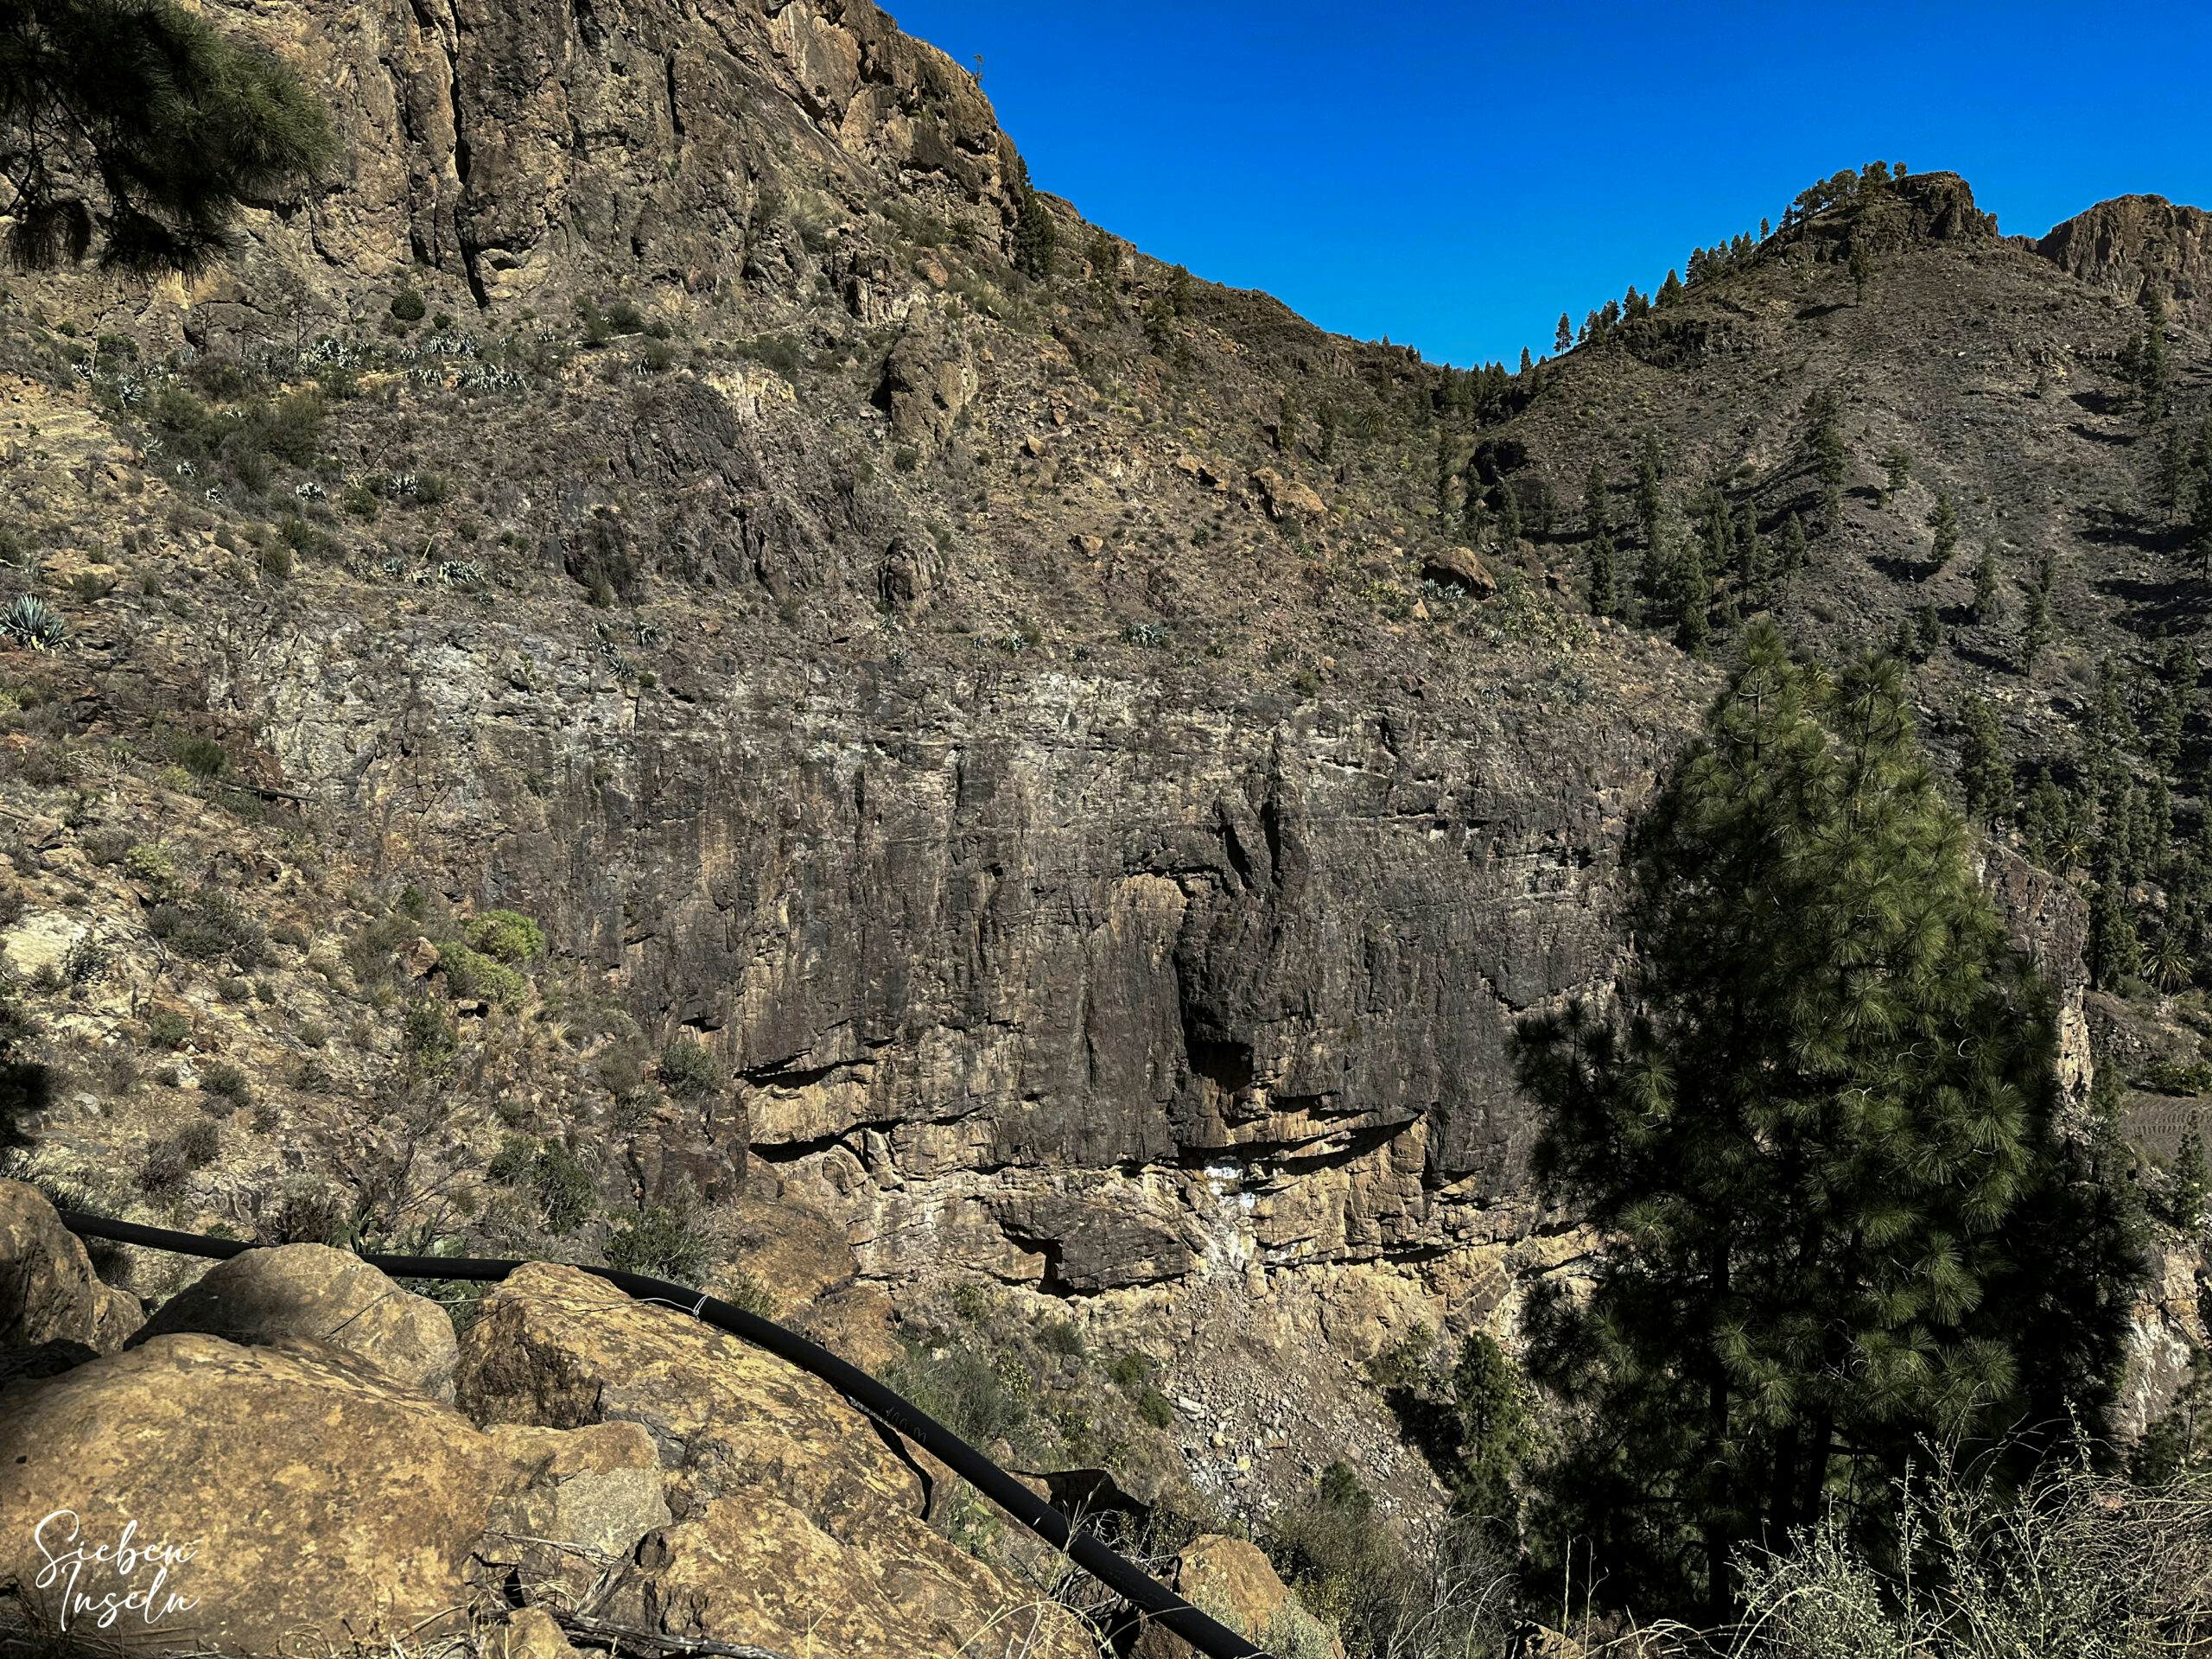 Mighty rock faces on the ascent path to Presa de Las Niñas above Soria